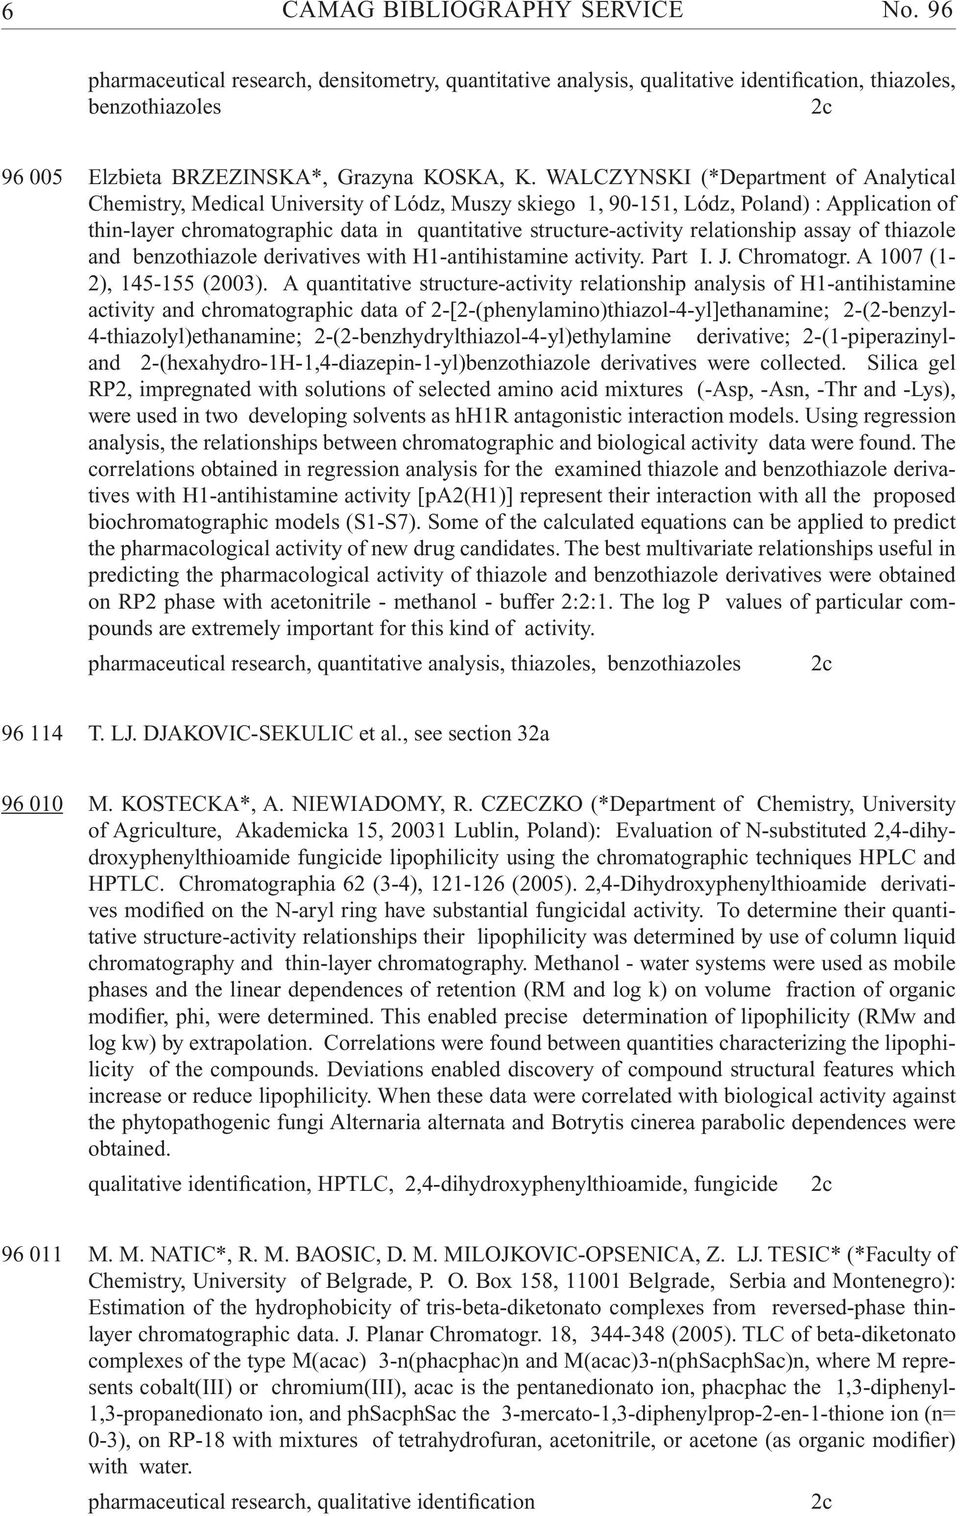 WALCZYNSKI (*Department of Analytical Chemistry, Medical University of Lódz, Muszy skiego 1, 90-151, Lódz, Poland) : Application of thin-layer chromatographic data in quantitative structure-activity